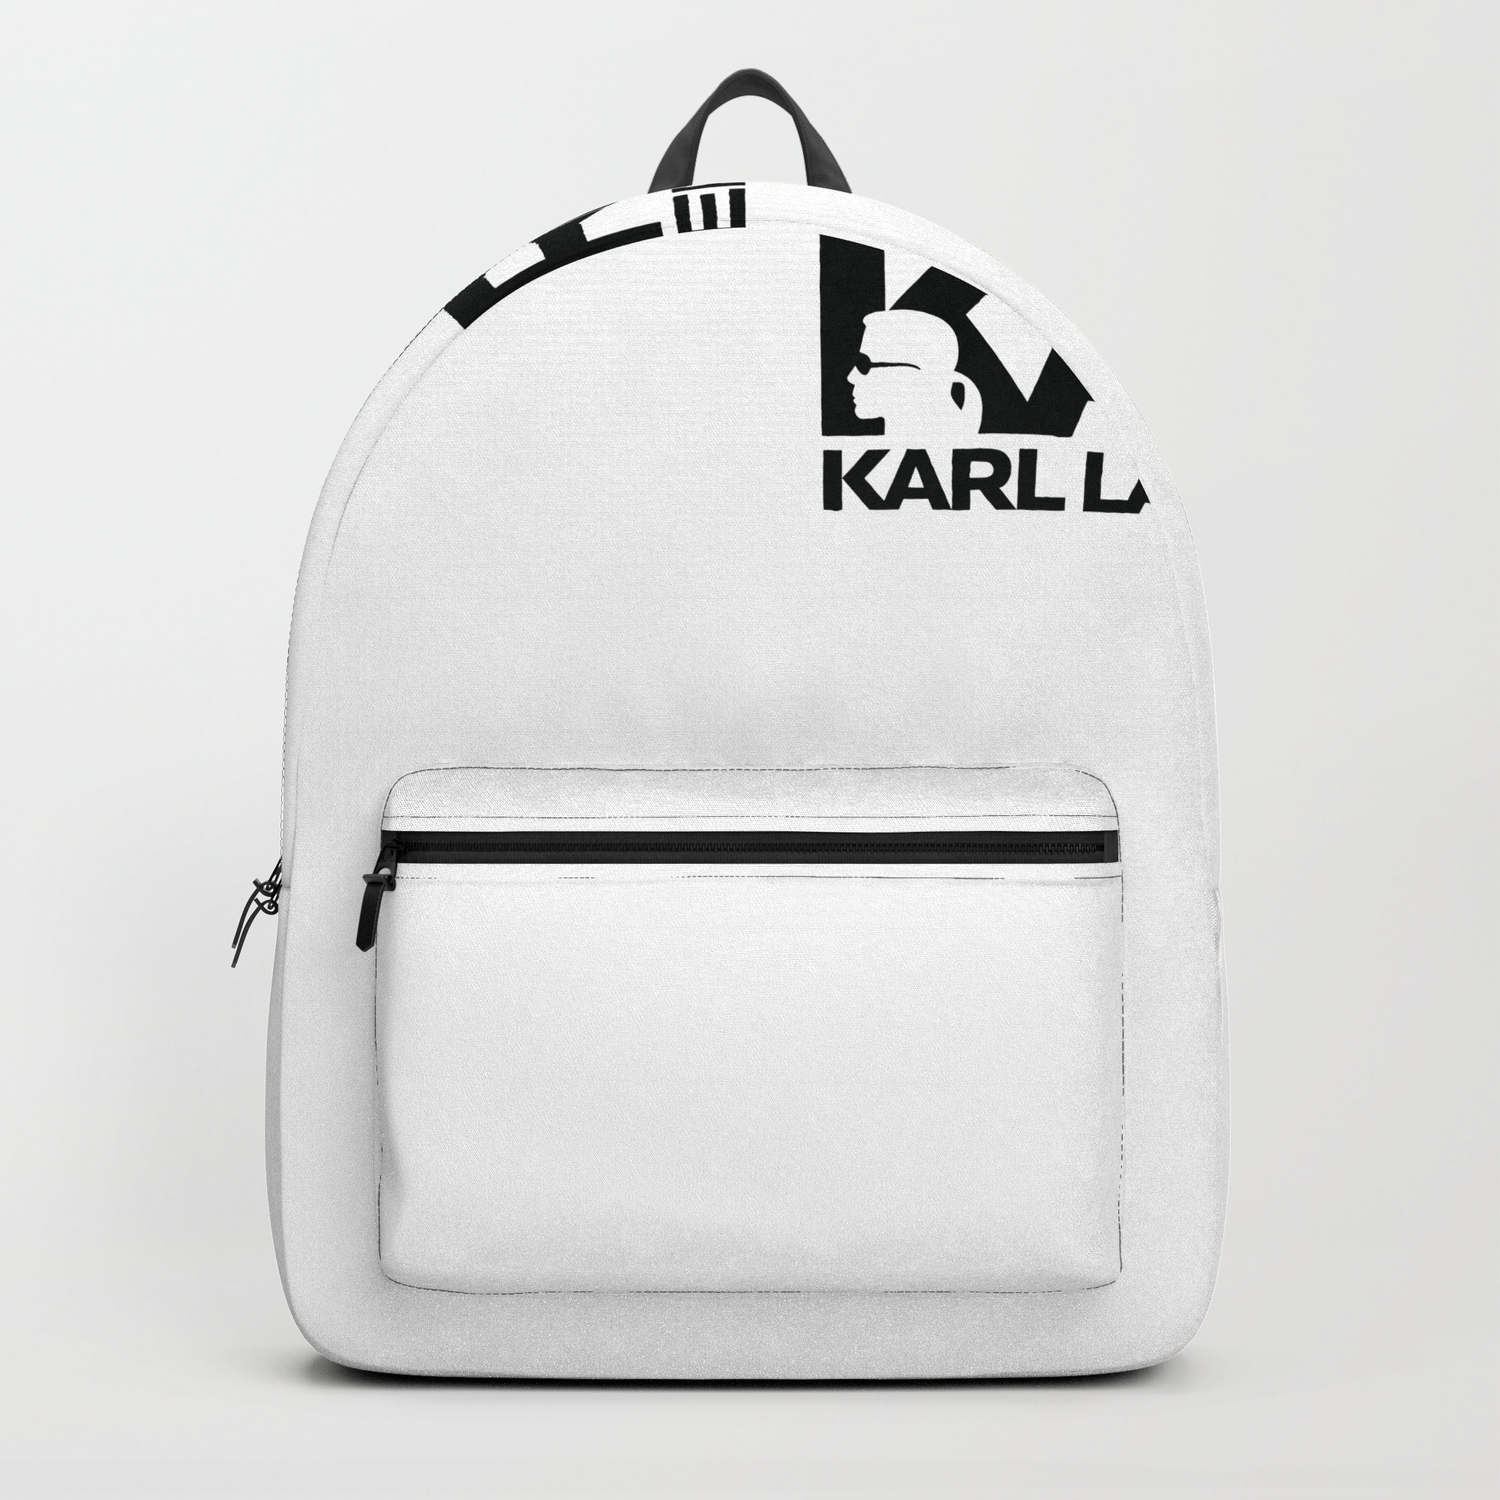 Minimaliseren Frank Haringen karl lagerfeld Backpack by coiphimm | Society6